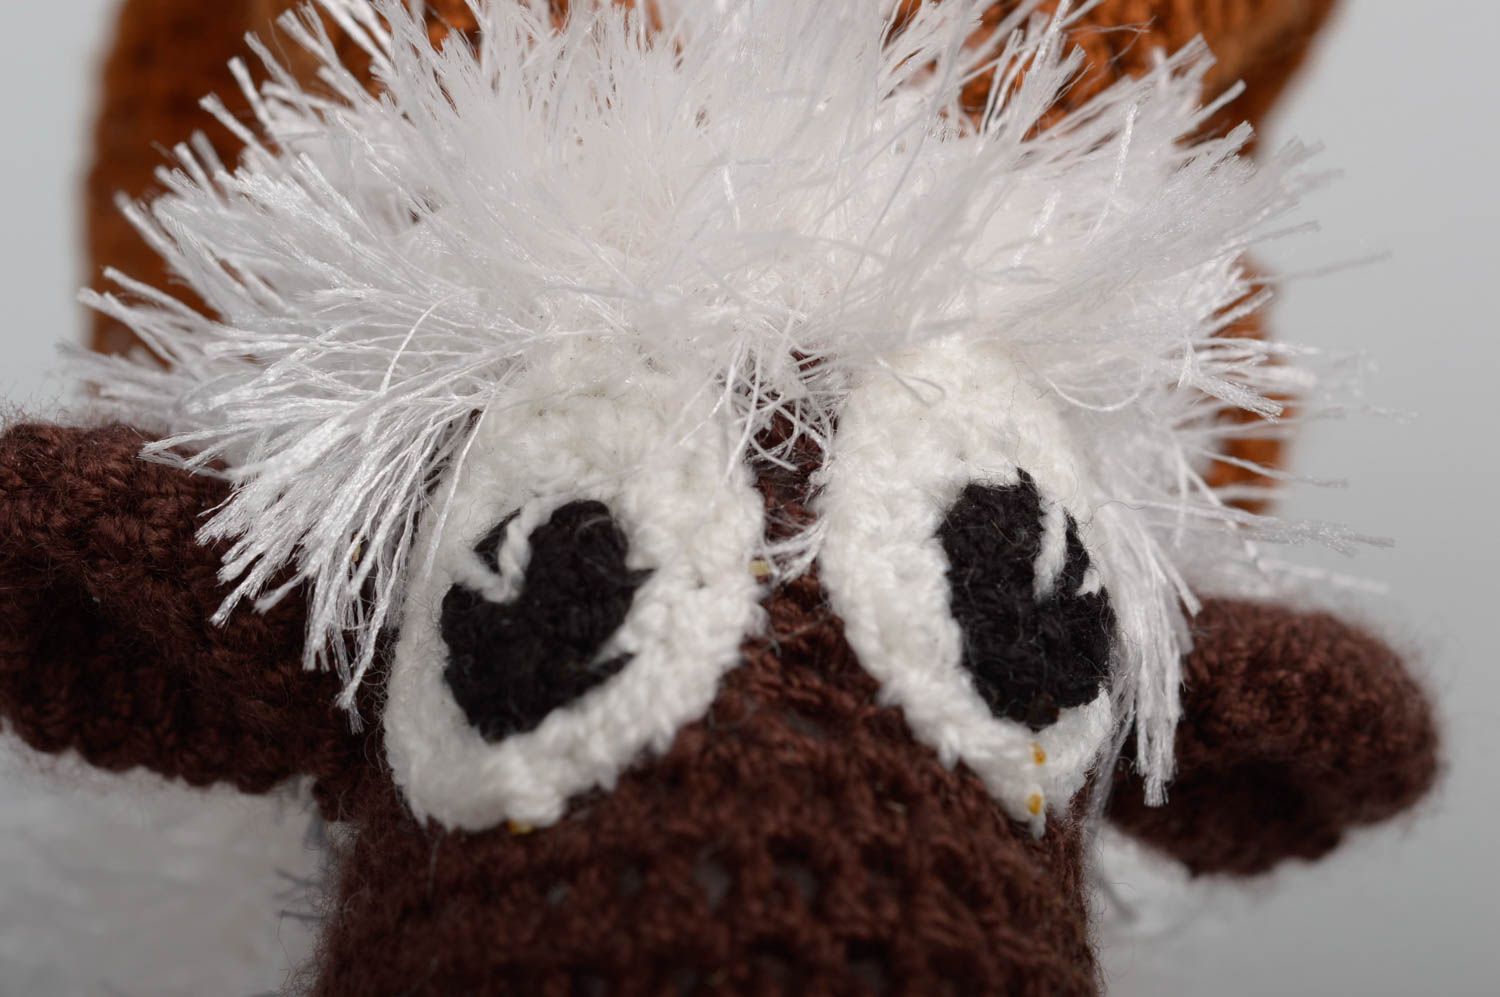 Handmade toy cuddly toys stuffed animals souvenir ideas nursery decor gift ideas photo 4